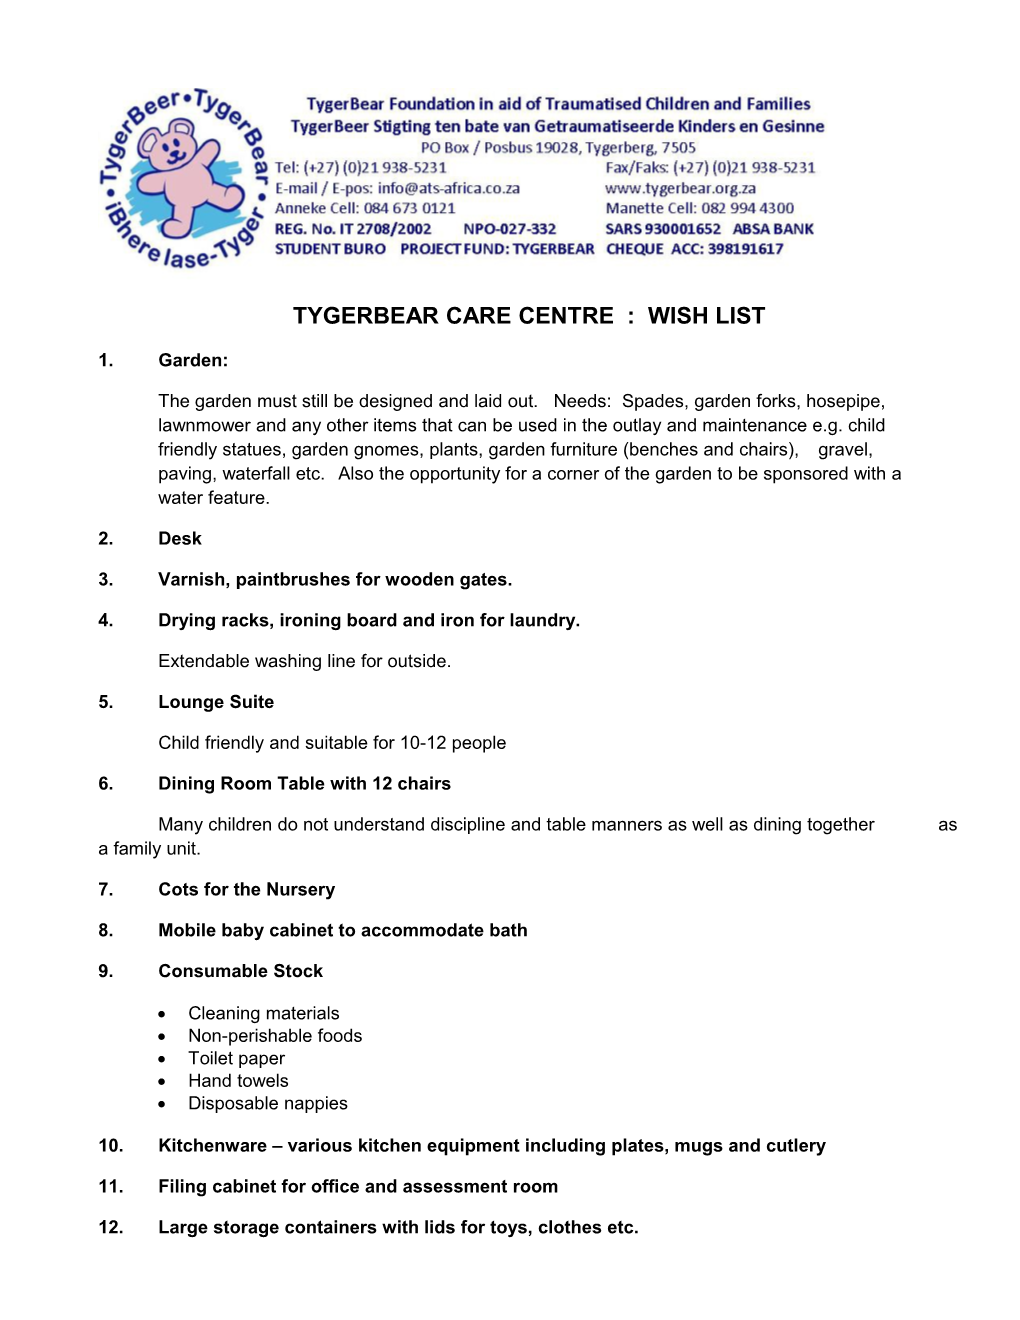 Tygerbear Care Centre : Wish List